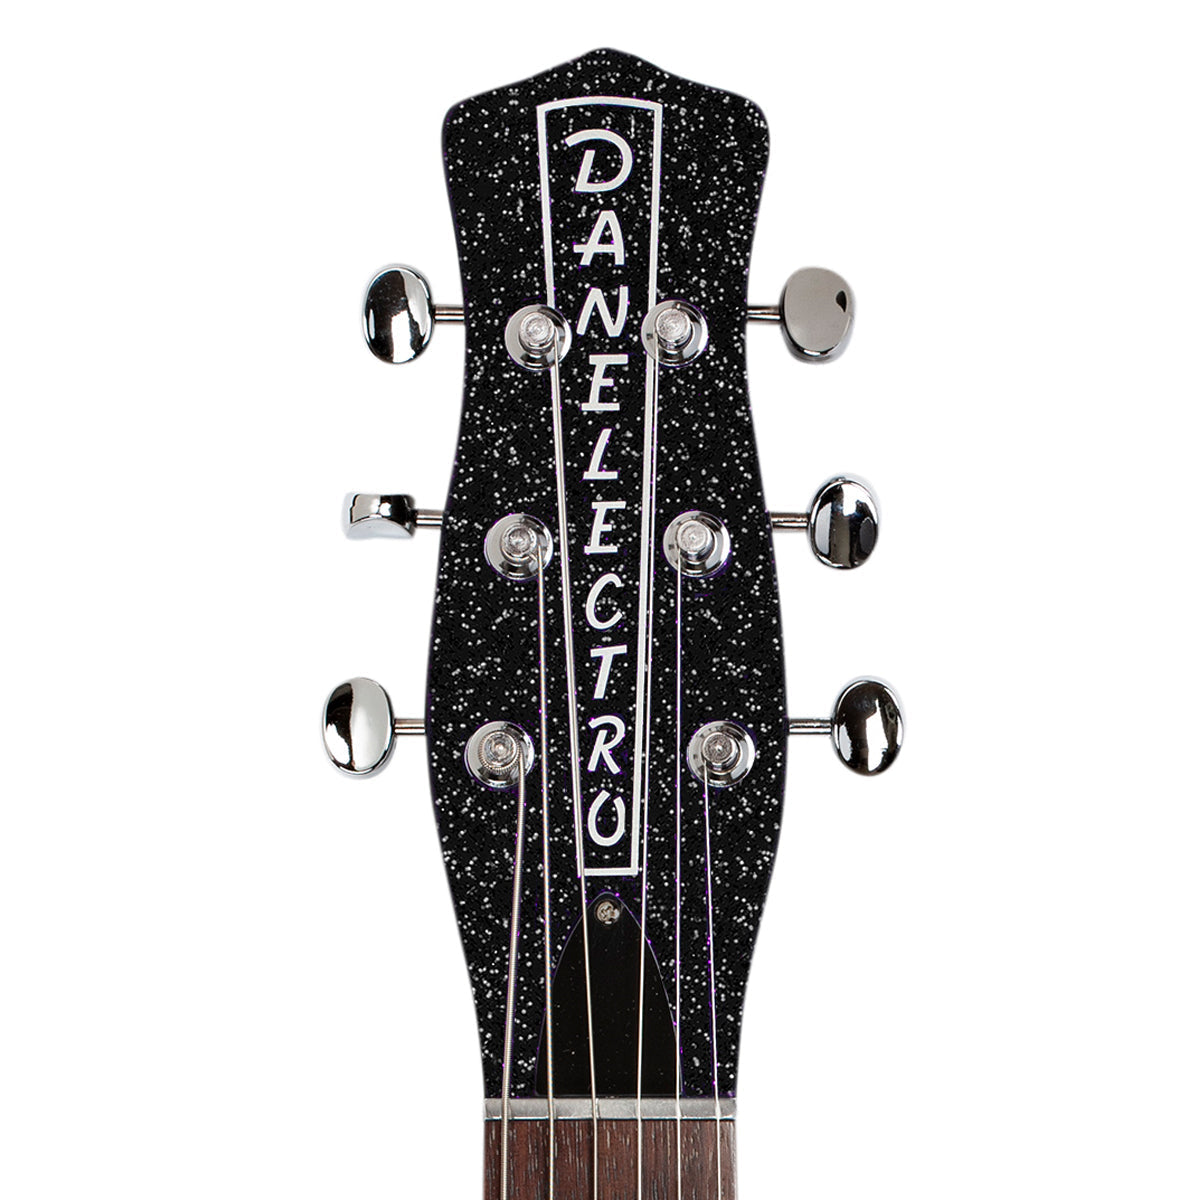 Danelectro Blackout '59M NOS+ Electric Guitar ~ Black Metalflake, Electric Guitar for sale at Richards Guitars.